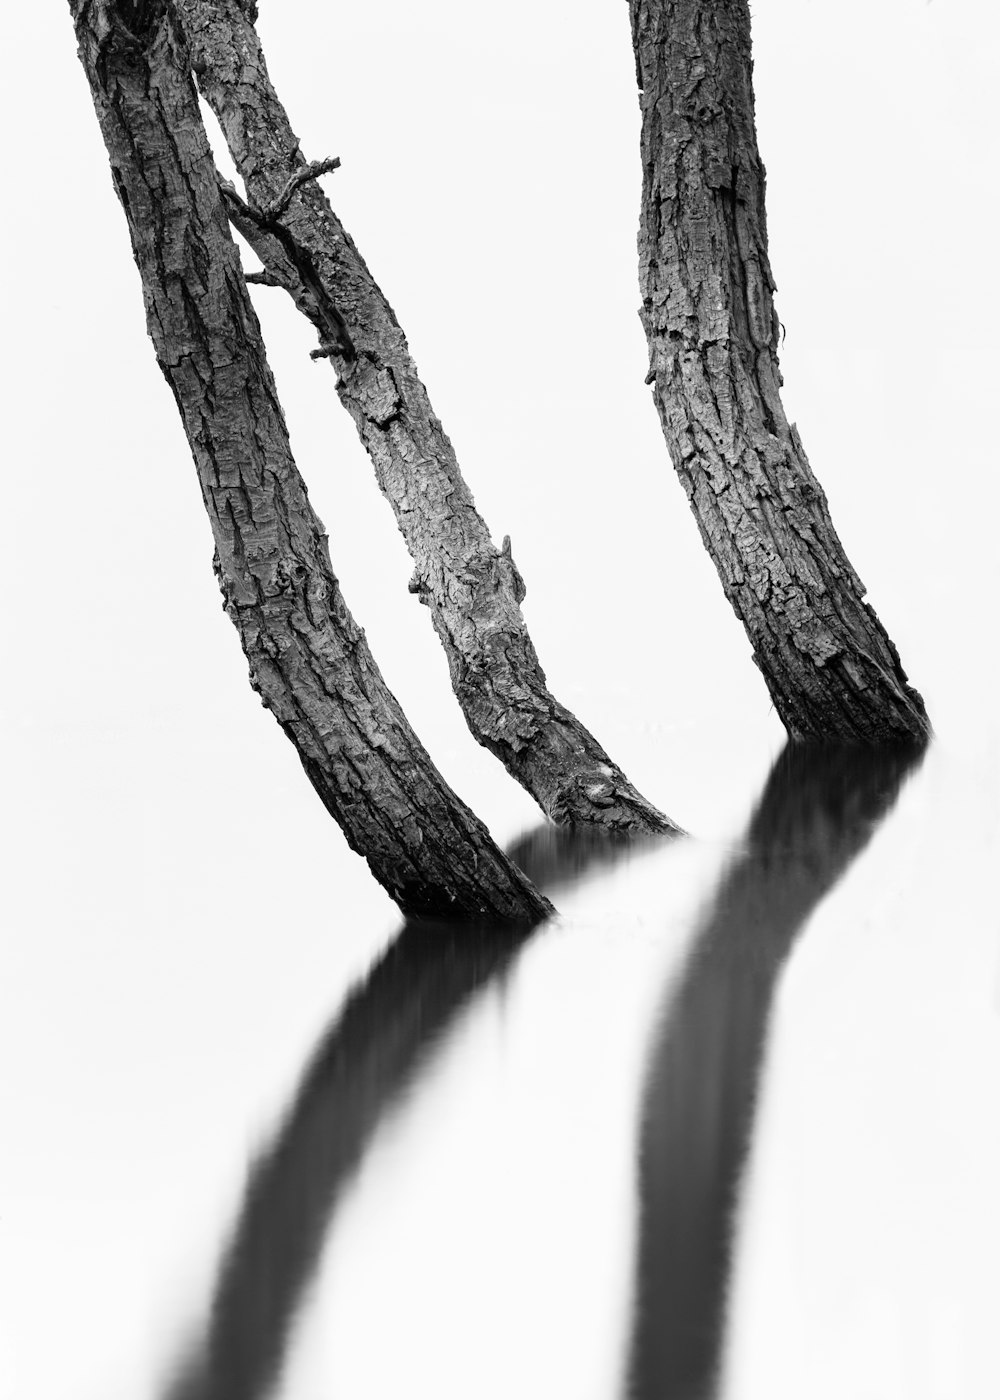 Foto en escala de grises de tres tocones de árboles